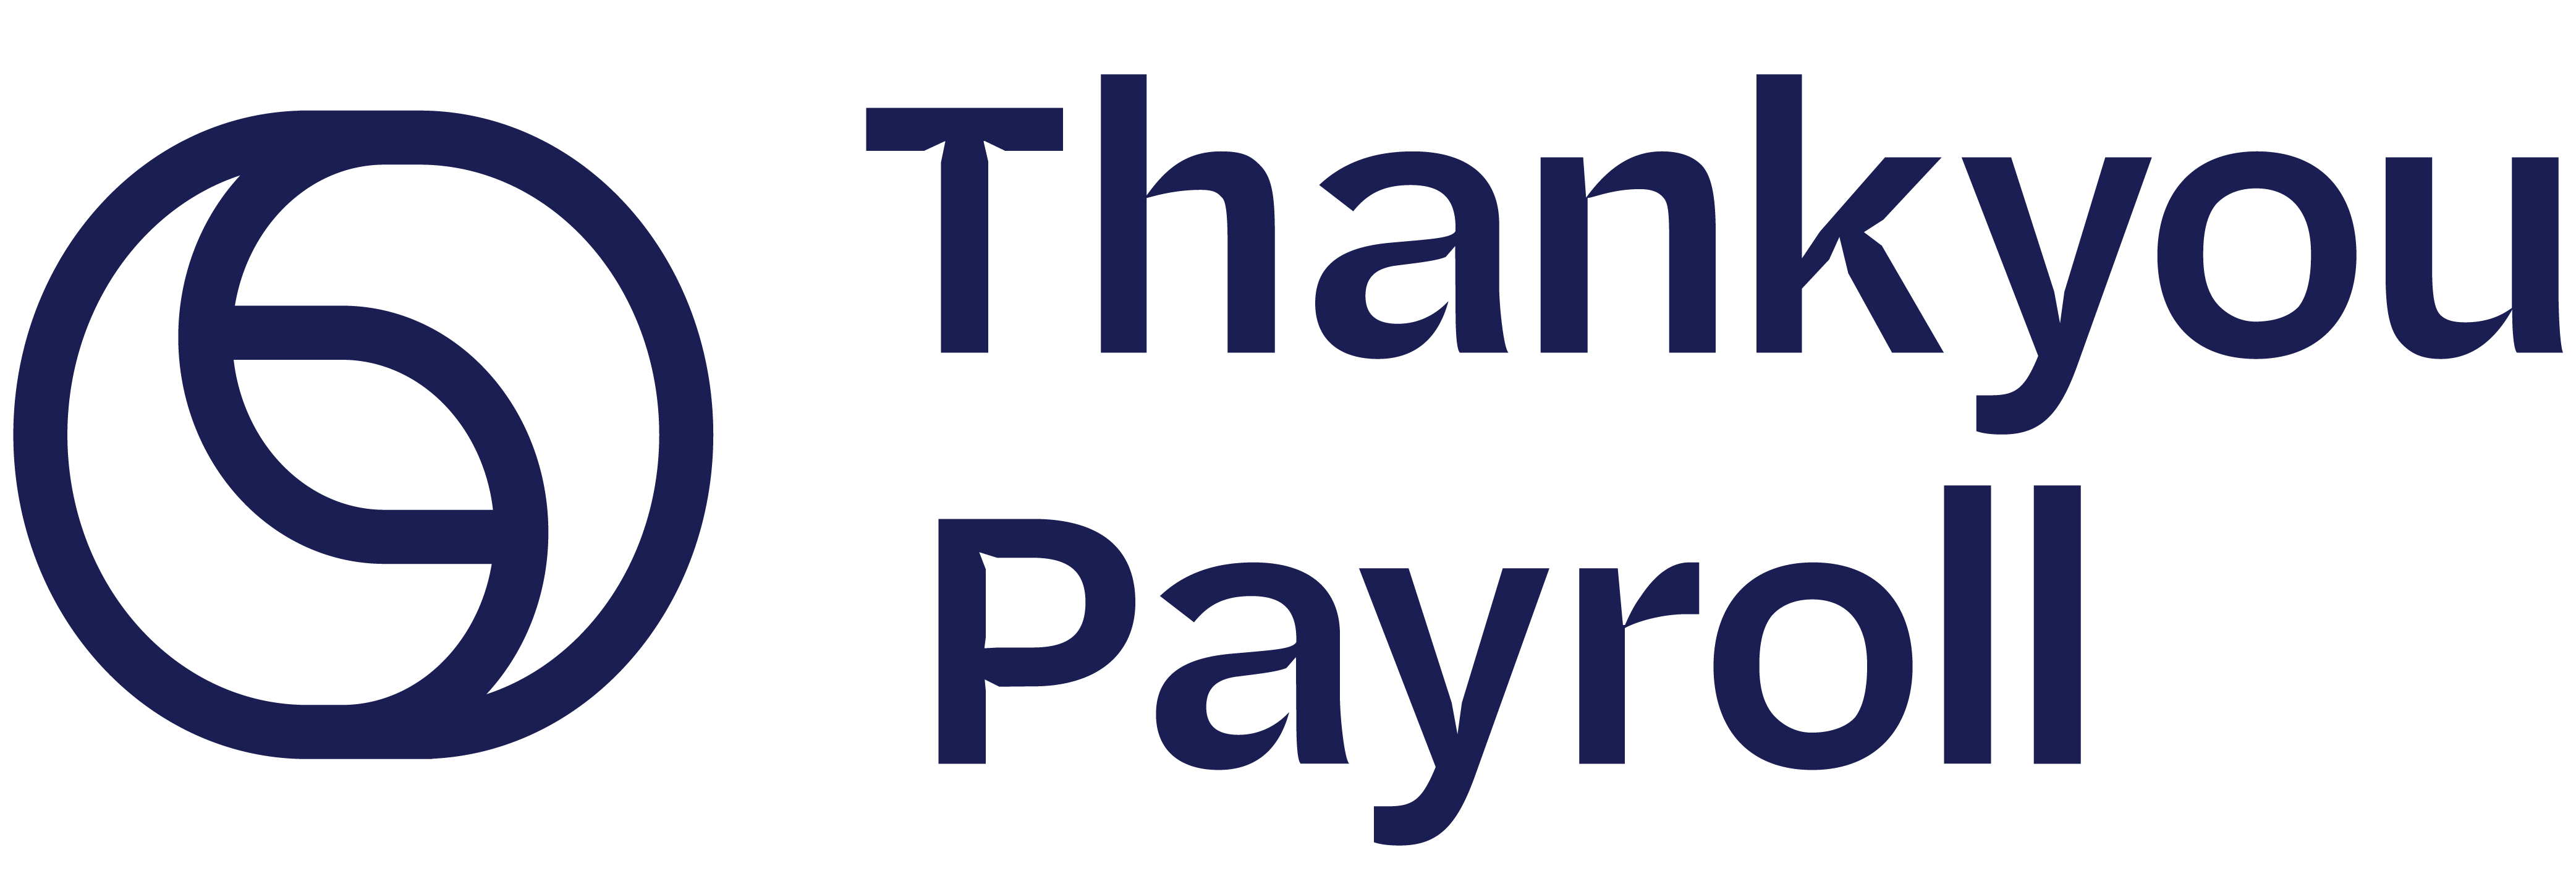 Thankyou Payroll - Business